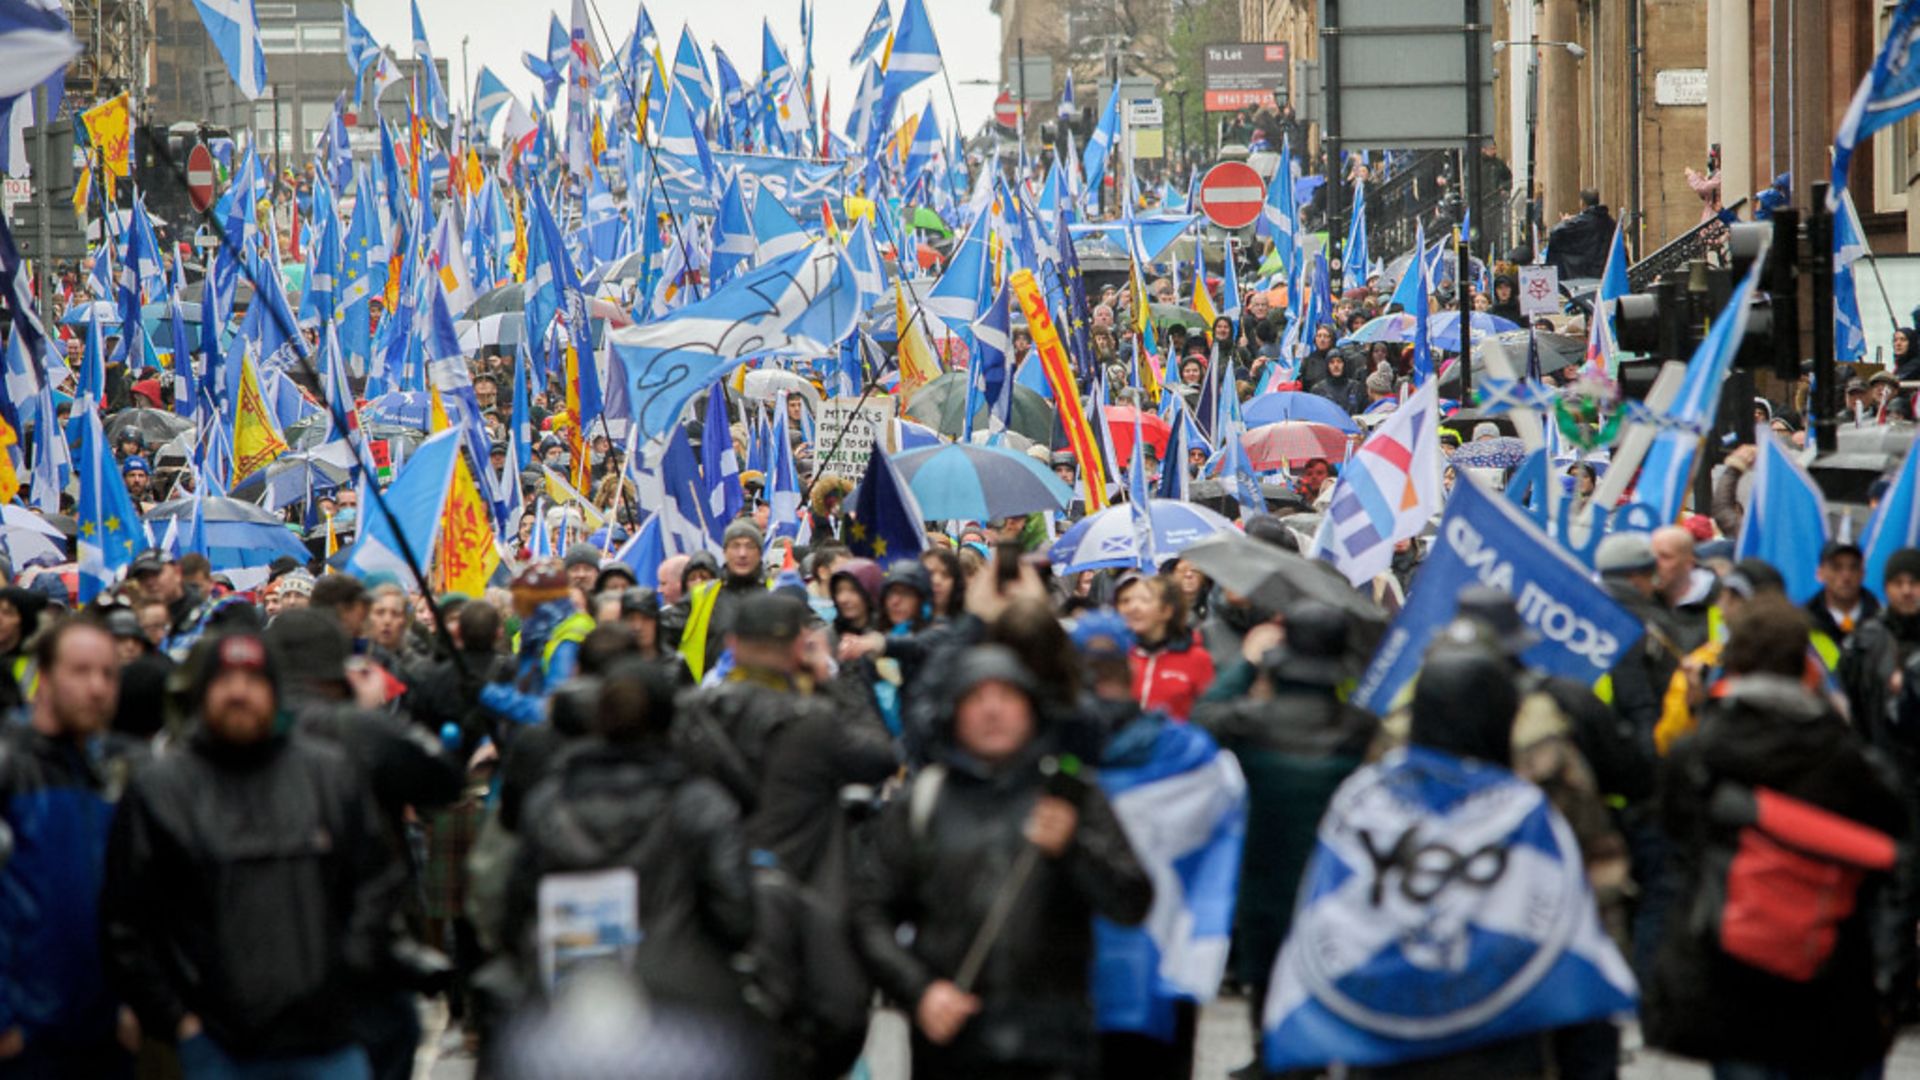 Unstoppable march? Scottish independence demonstrators in Glasgow, in January 2020 - Credit: SOPA Images/LightRocket via Gett